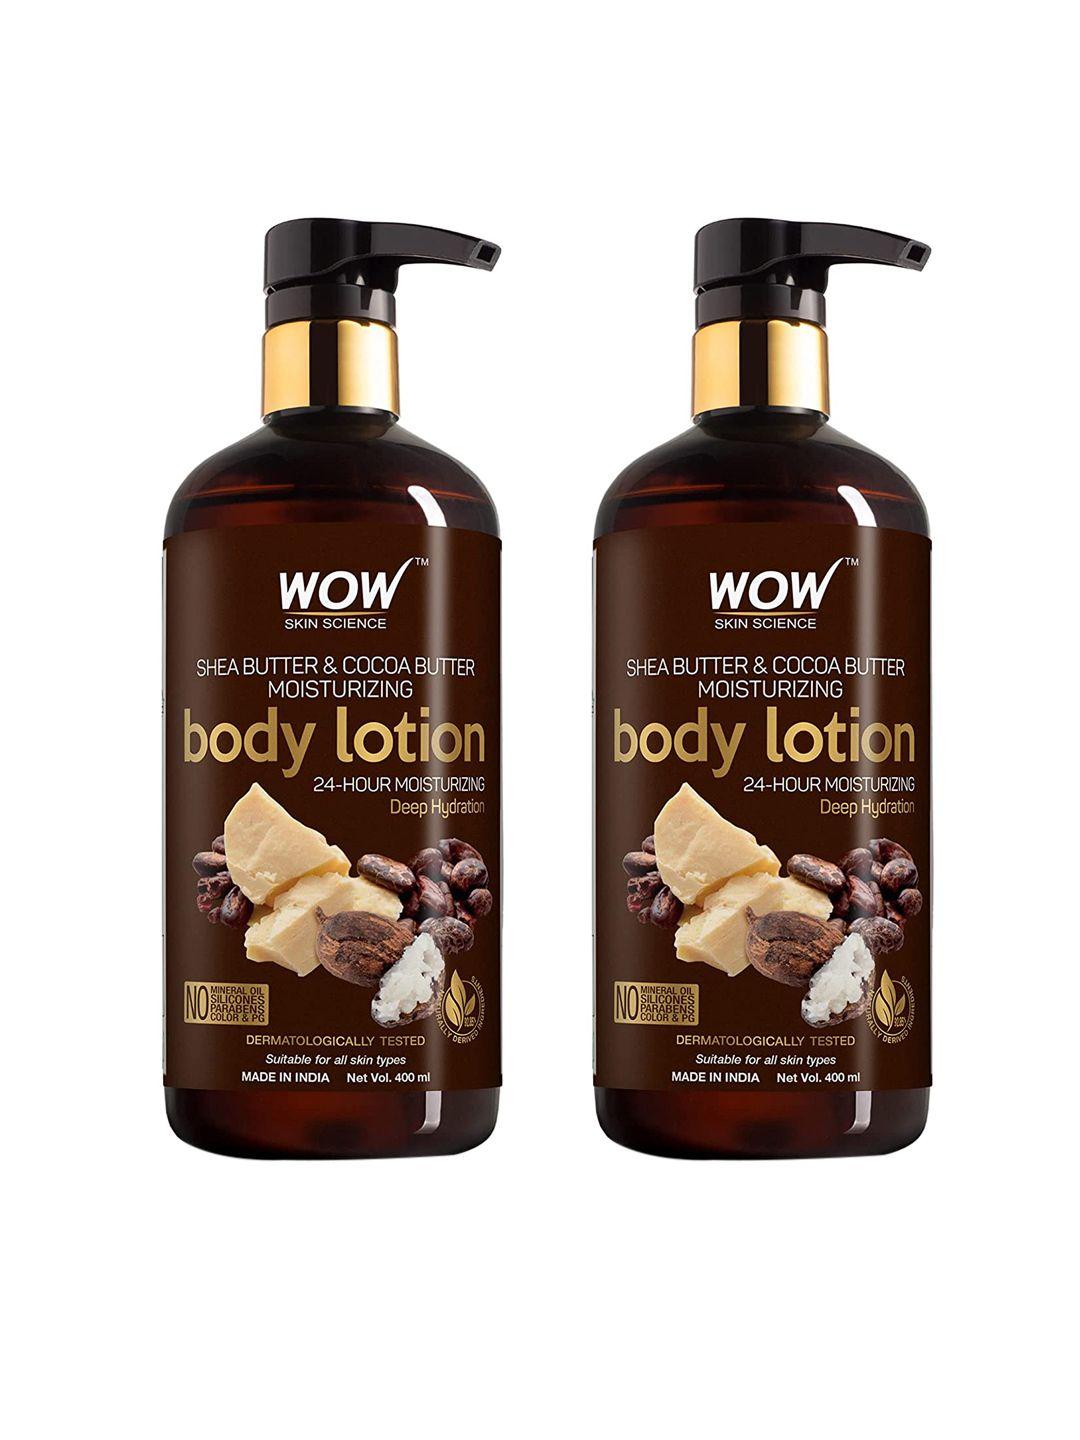 wow skin science set of 2 shea & cocoa butter moisturizing body lotion - 400 ml each